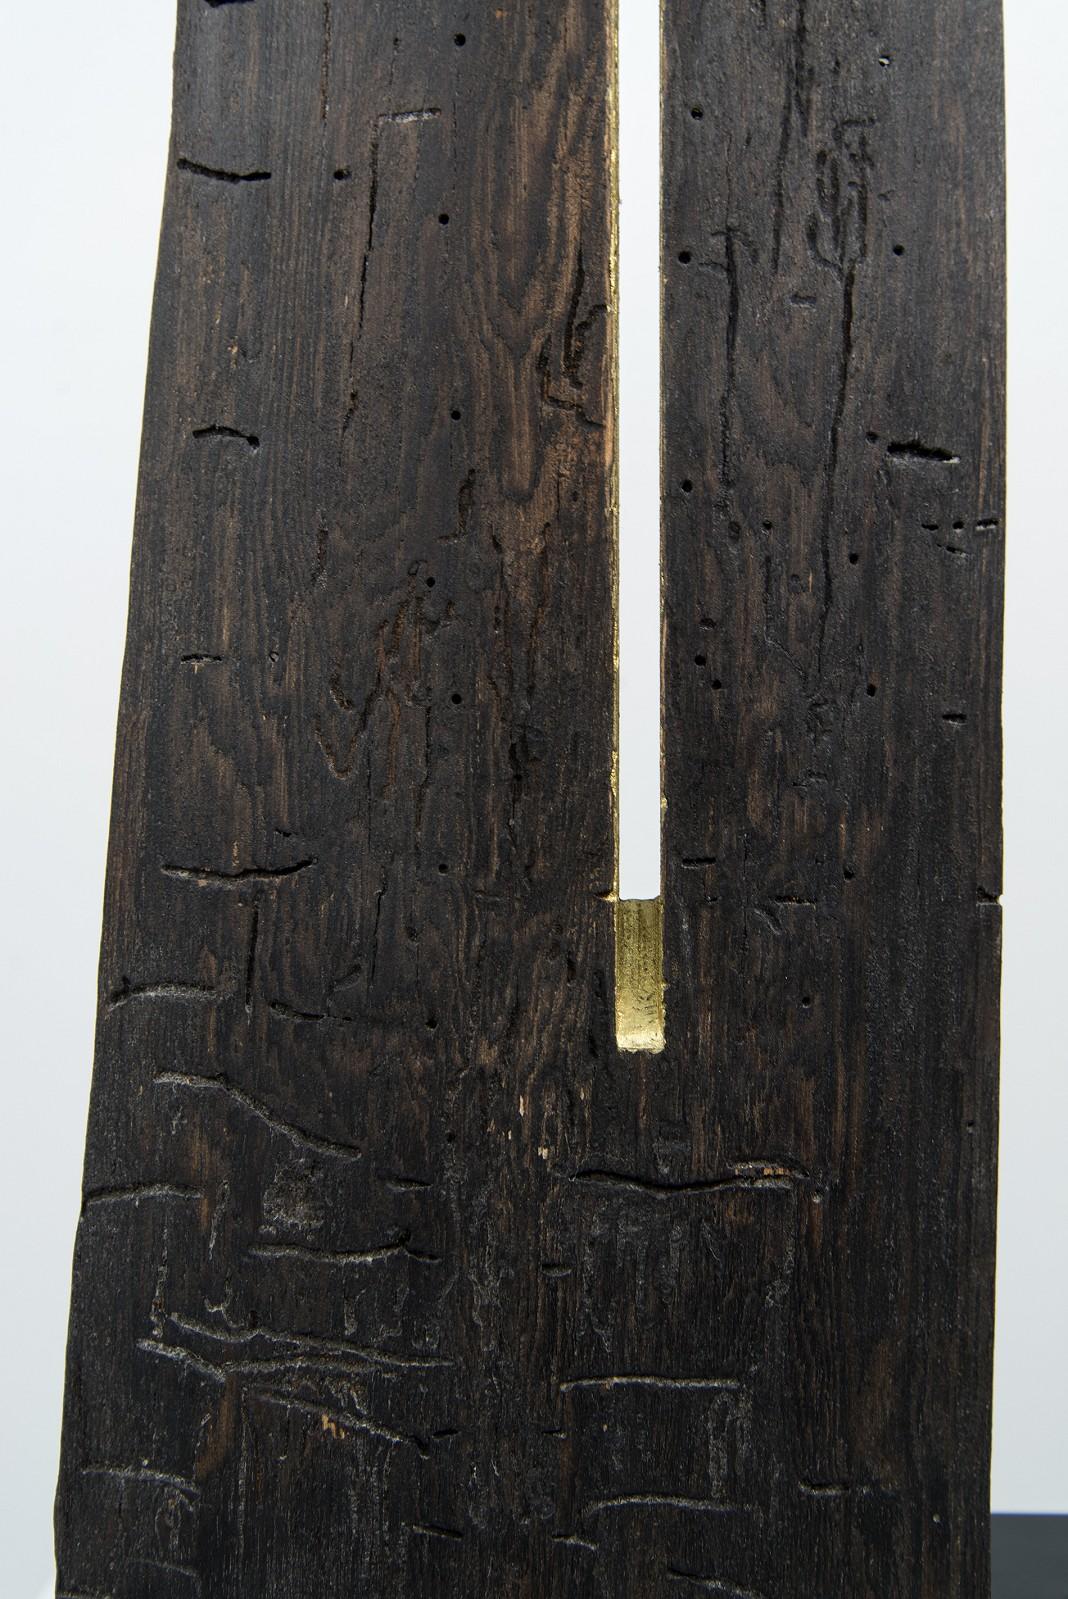 Abide - dark, dynamic, modern, contemporary, abstract, wooden sculpture - Brown Abstract Sculpture by Edward Falkenberg